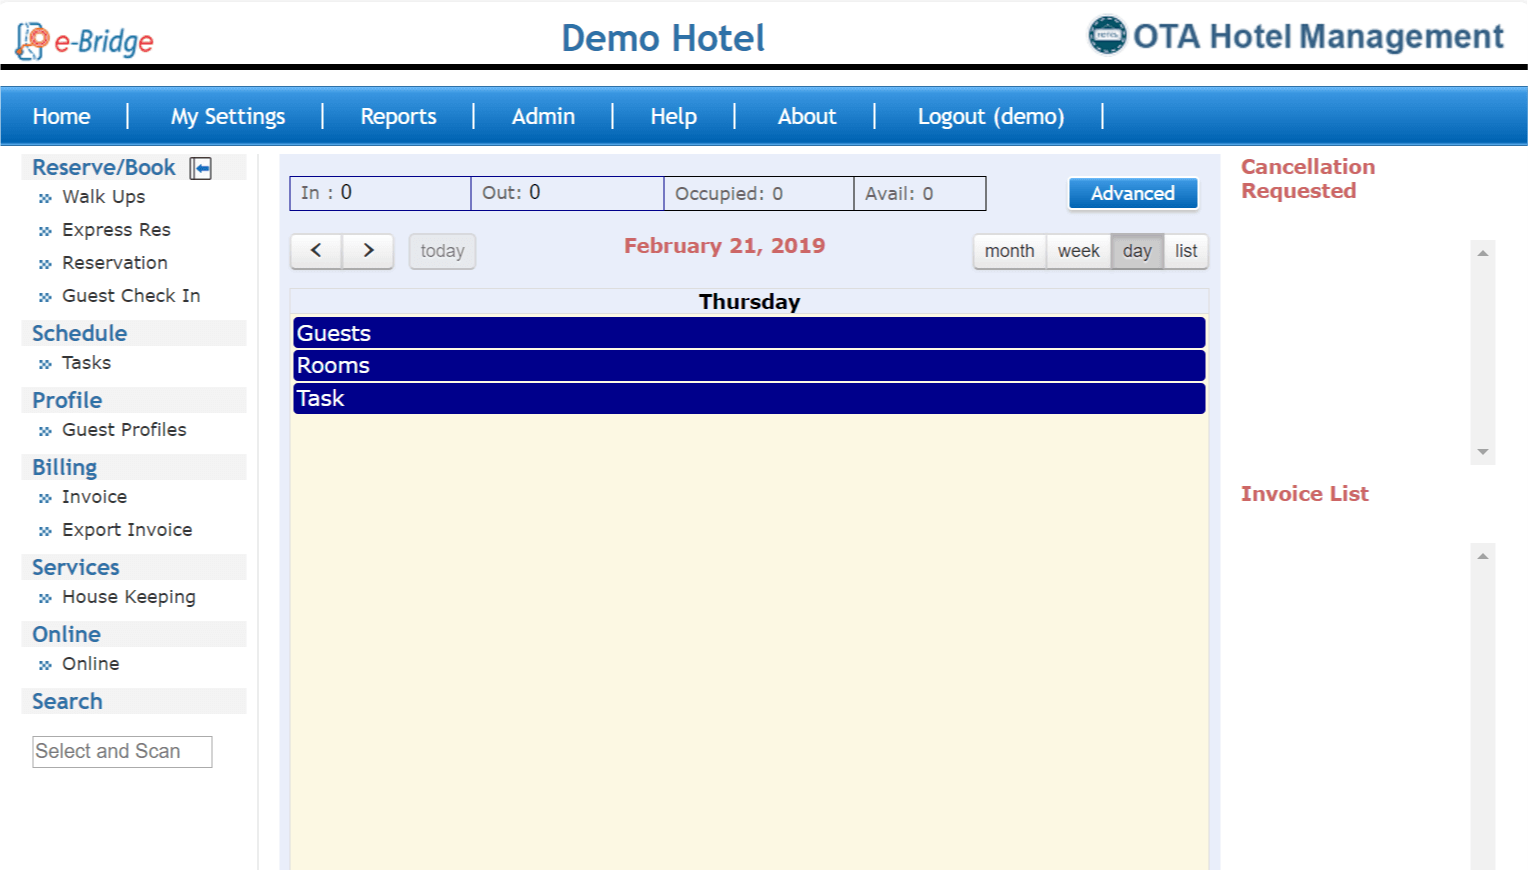 OTA Hotel Management software